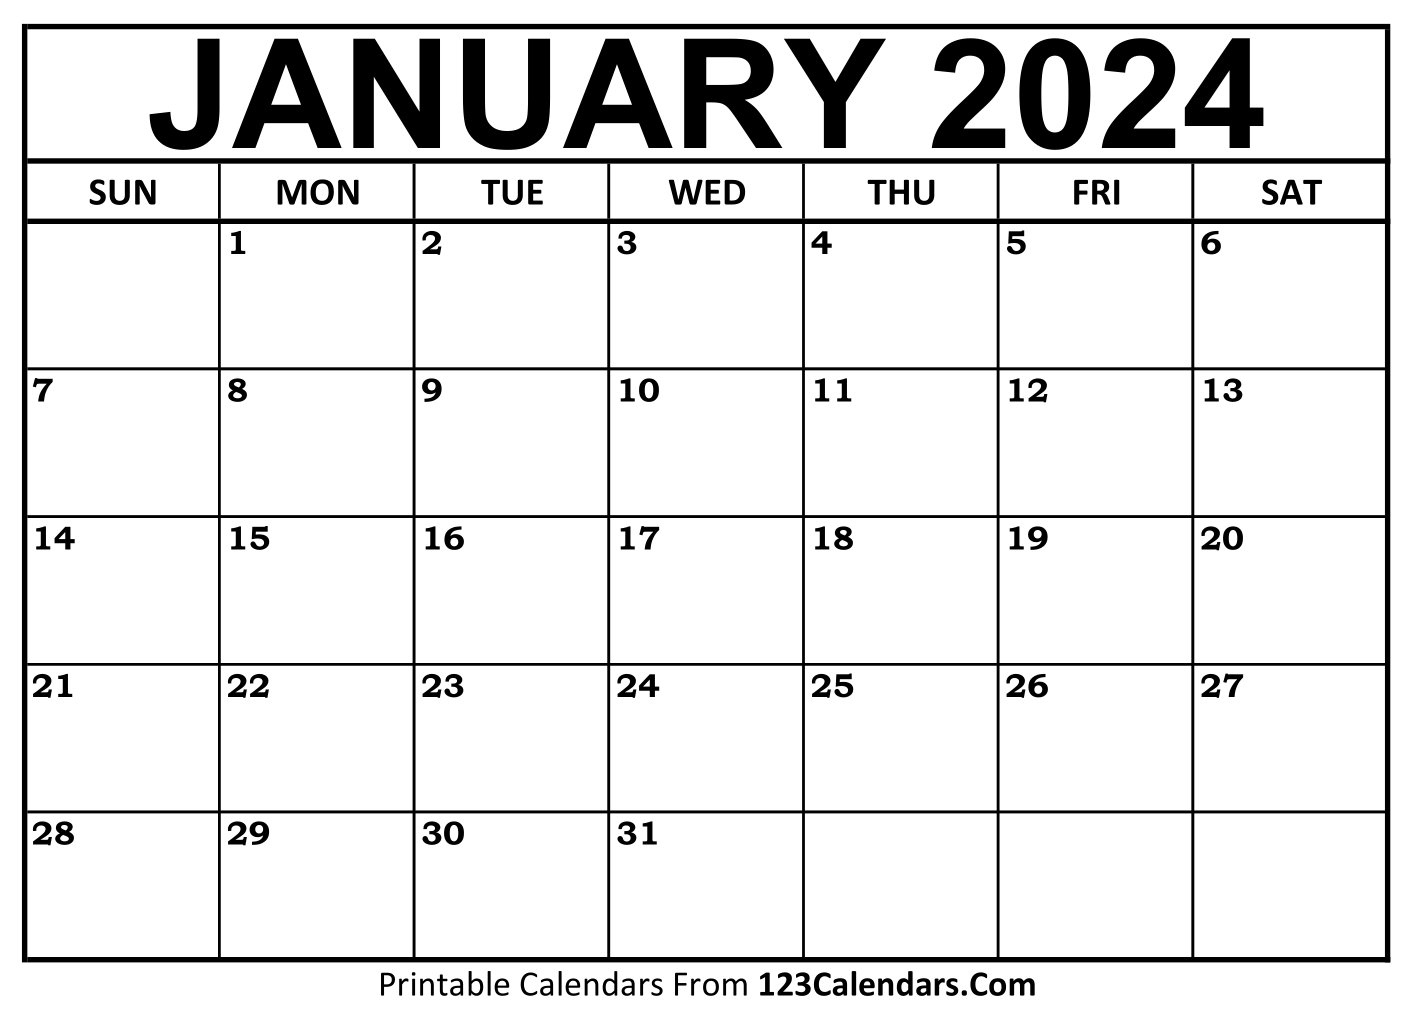 Printable January 2024 Calendar Templates - 123Calendars | Printable Calendar 2024 January To June